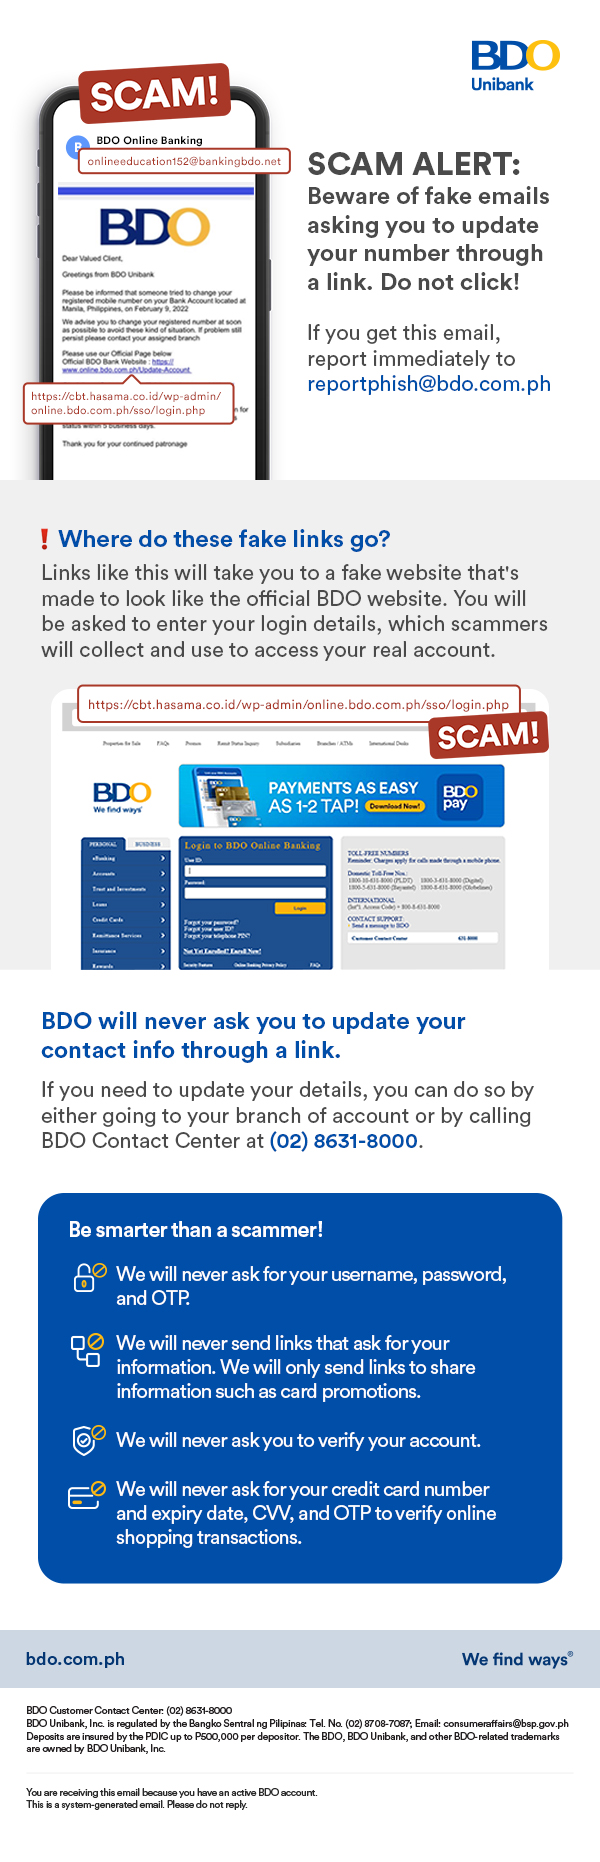 #BDOAntiScam: Don’t click that link!